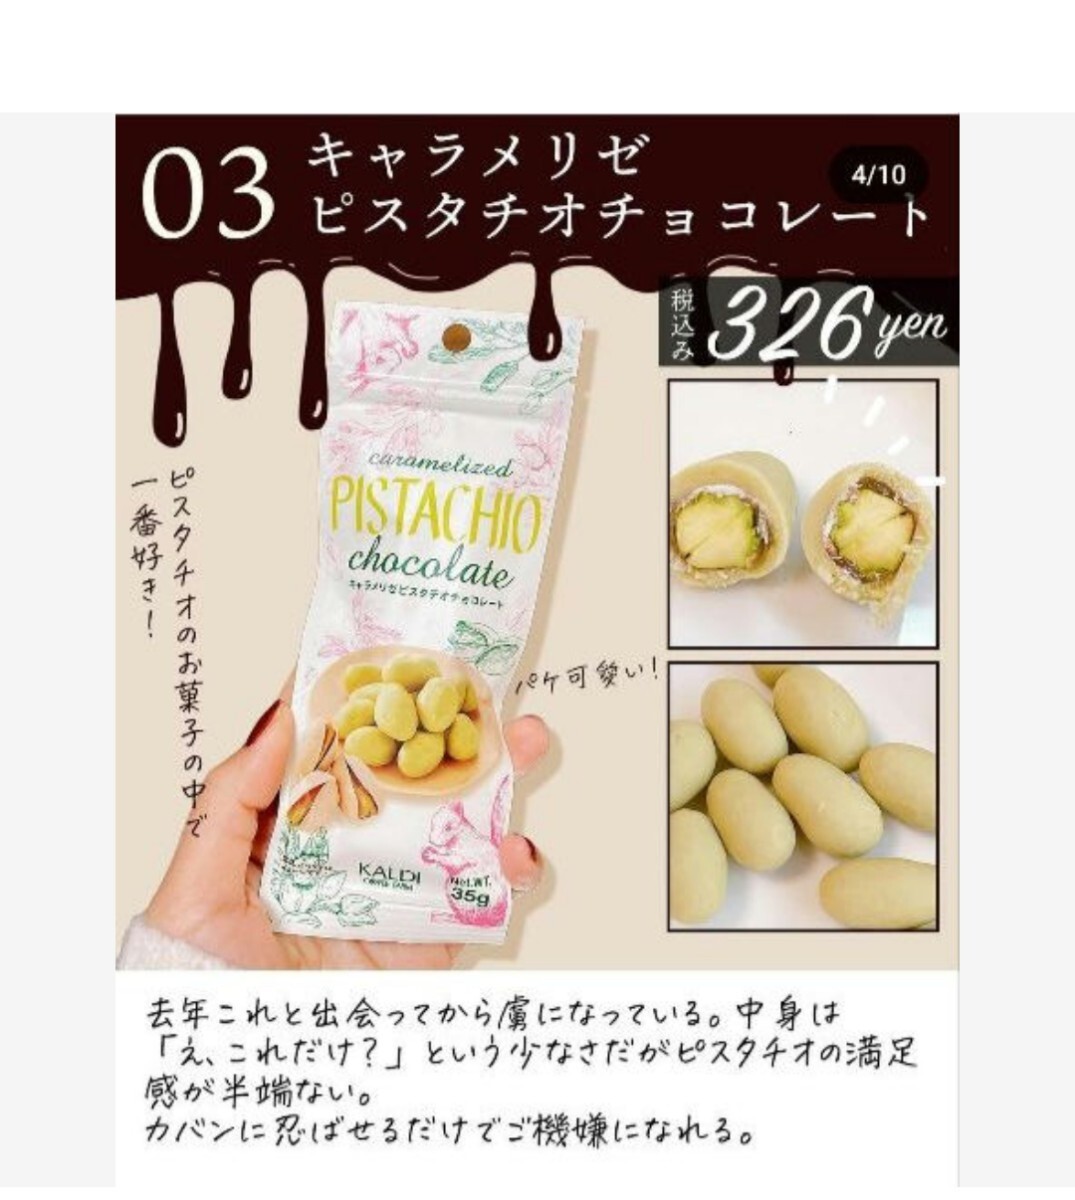  Cara me Rize pistachio chocolate 200g×5 sack pastry chocolate chocolate 